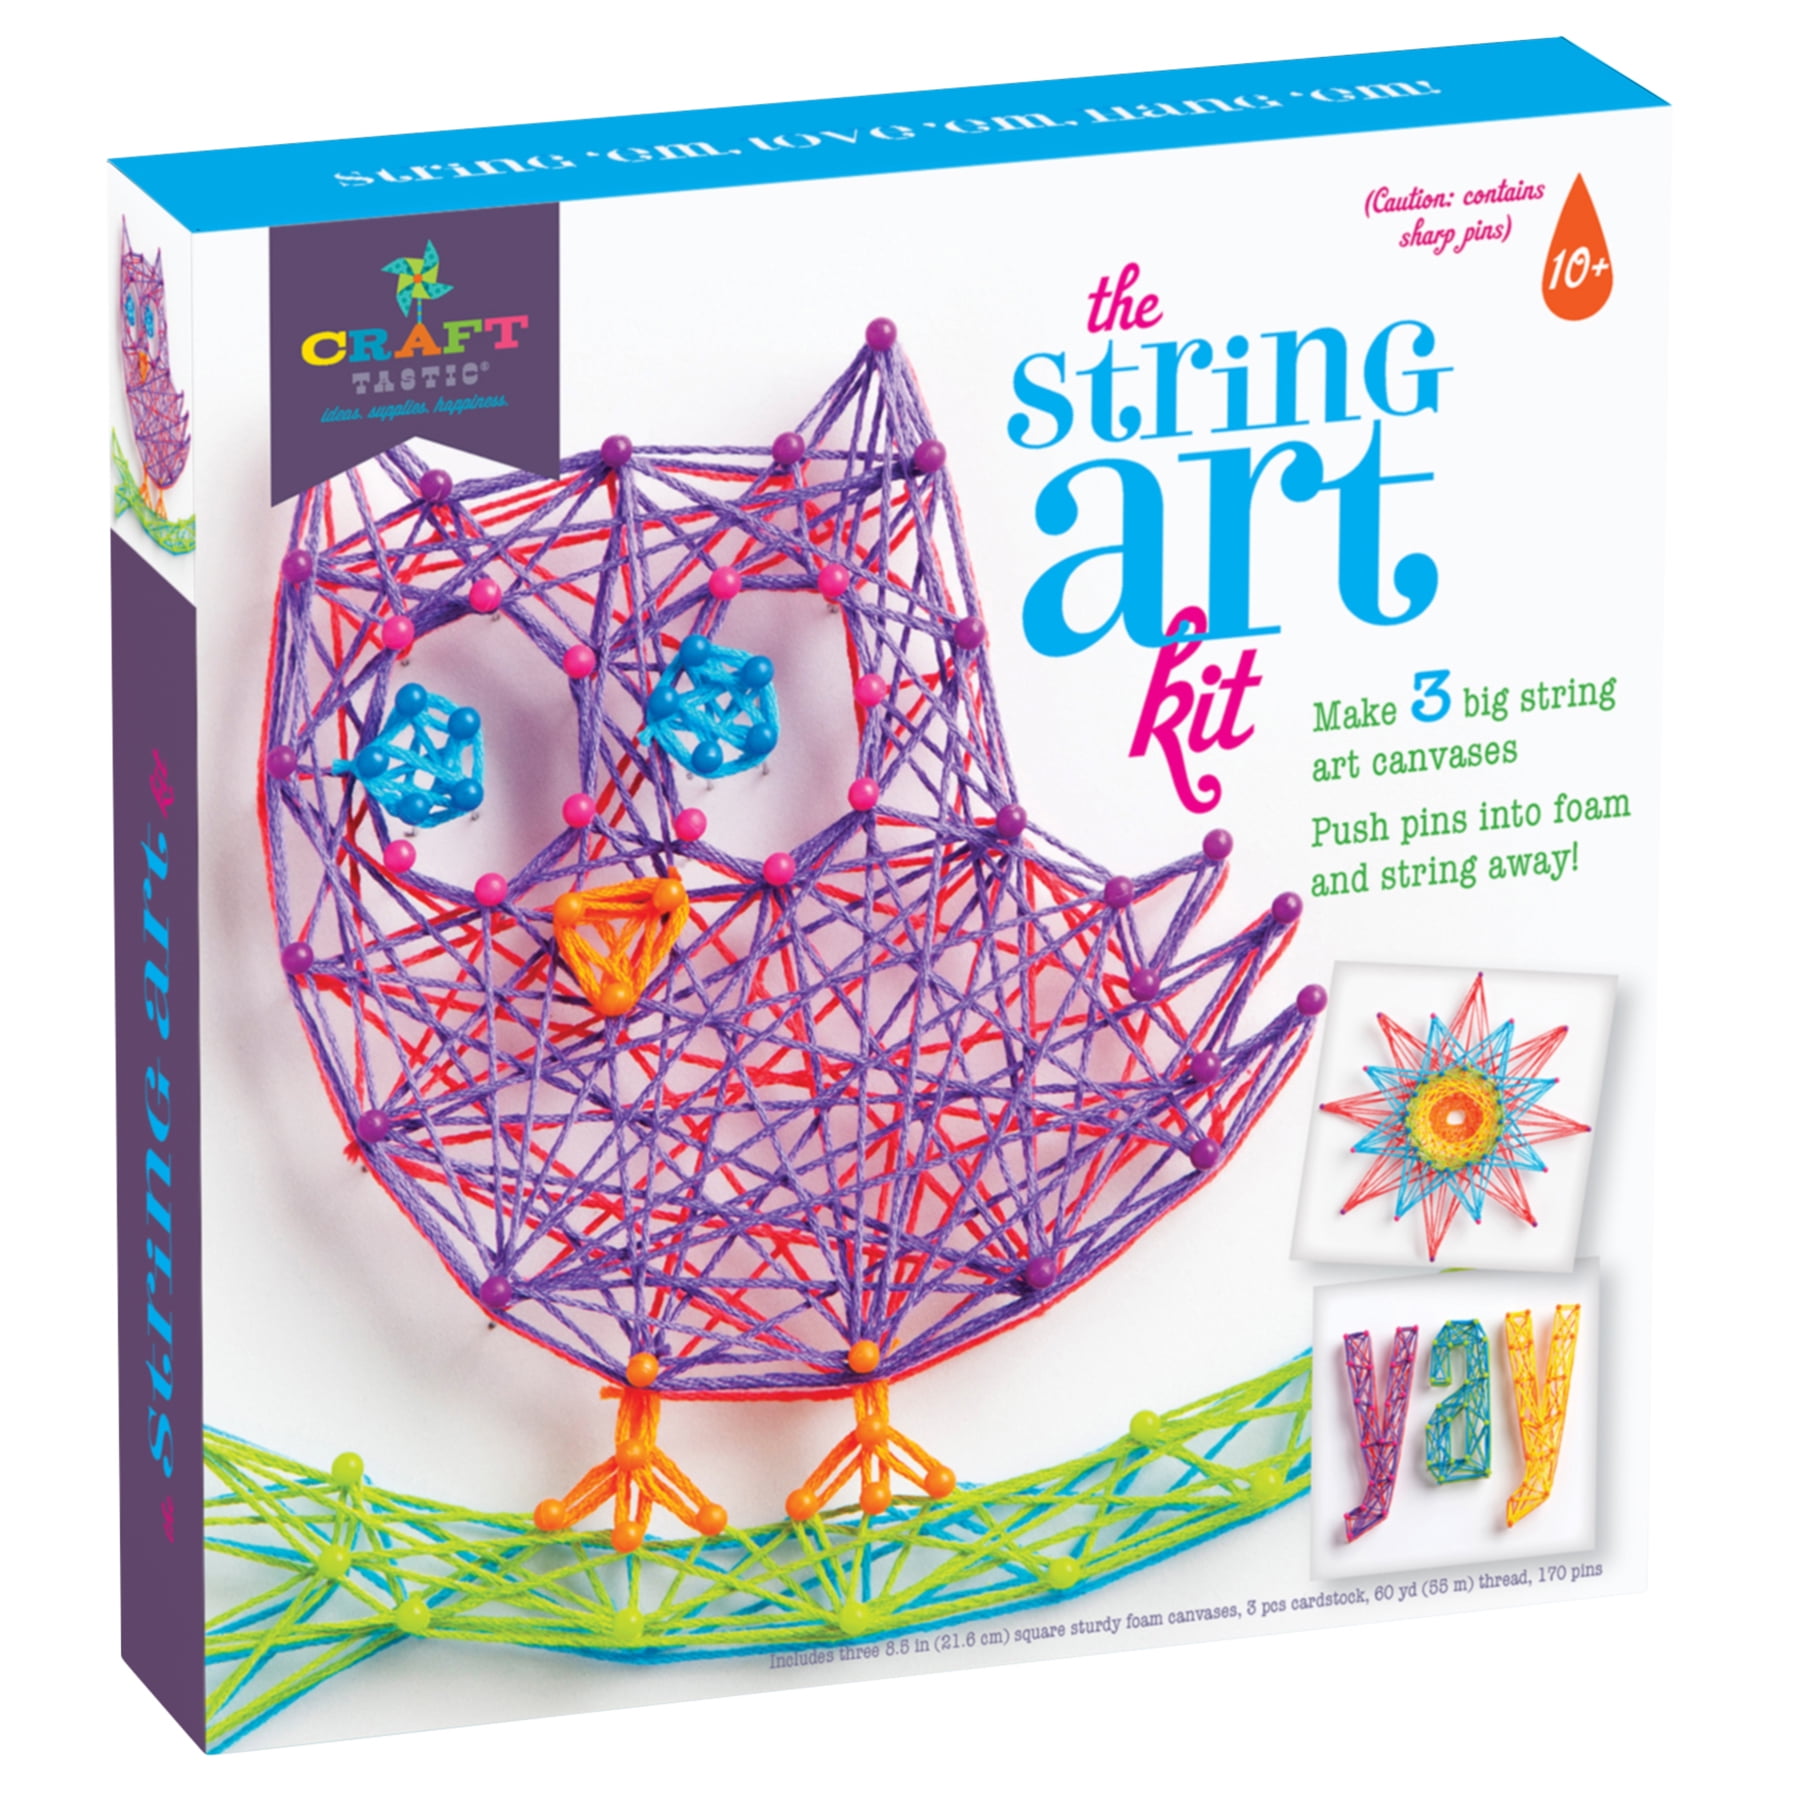 Craft-tastic Owl String Art Craft Kit